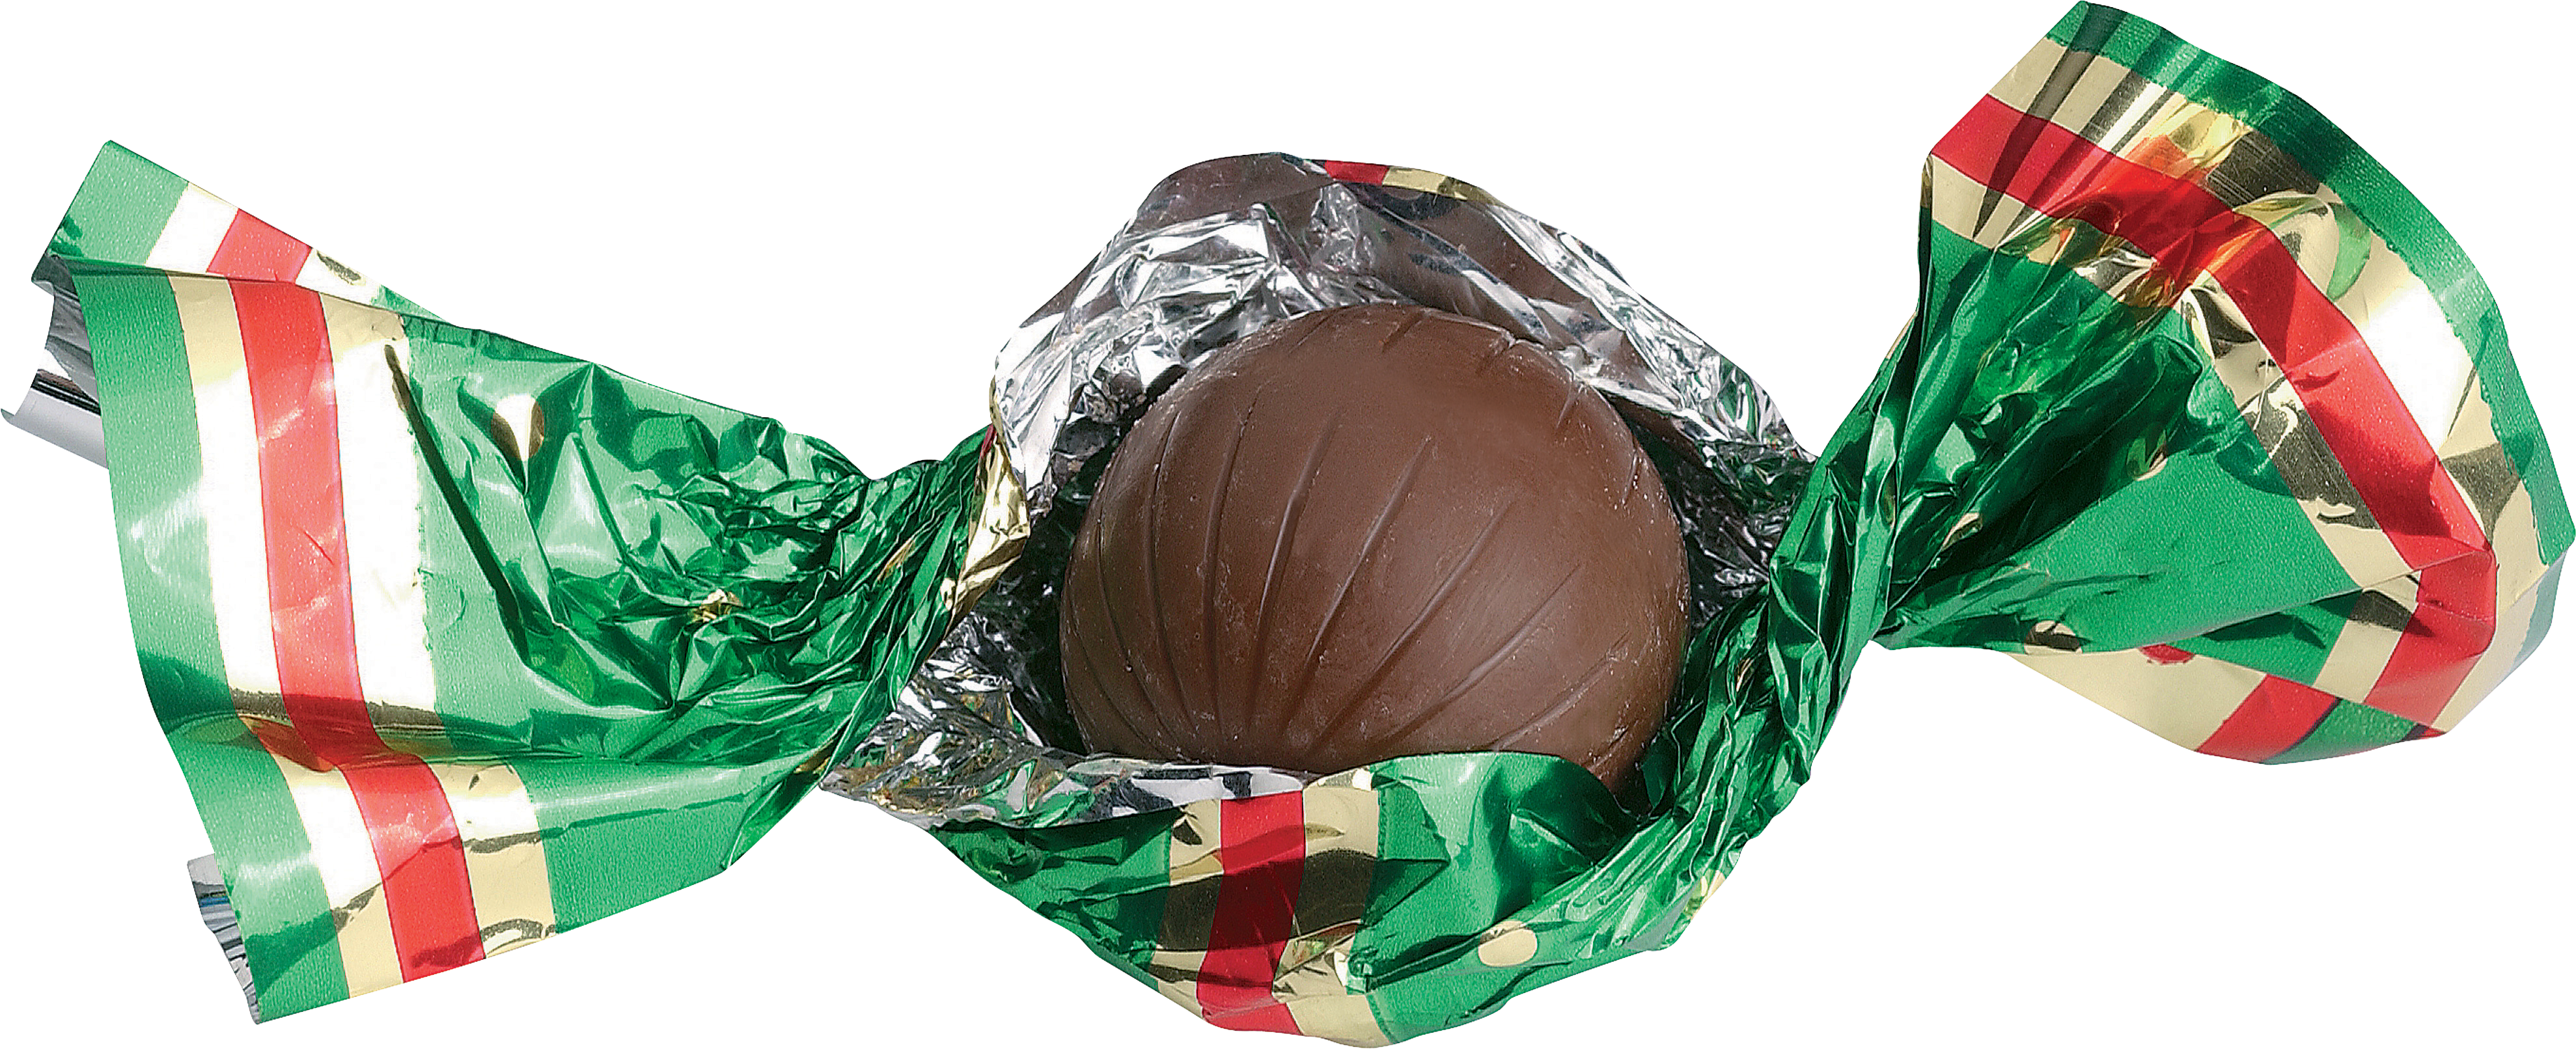 Chocolate Bonbon PNG Image